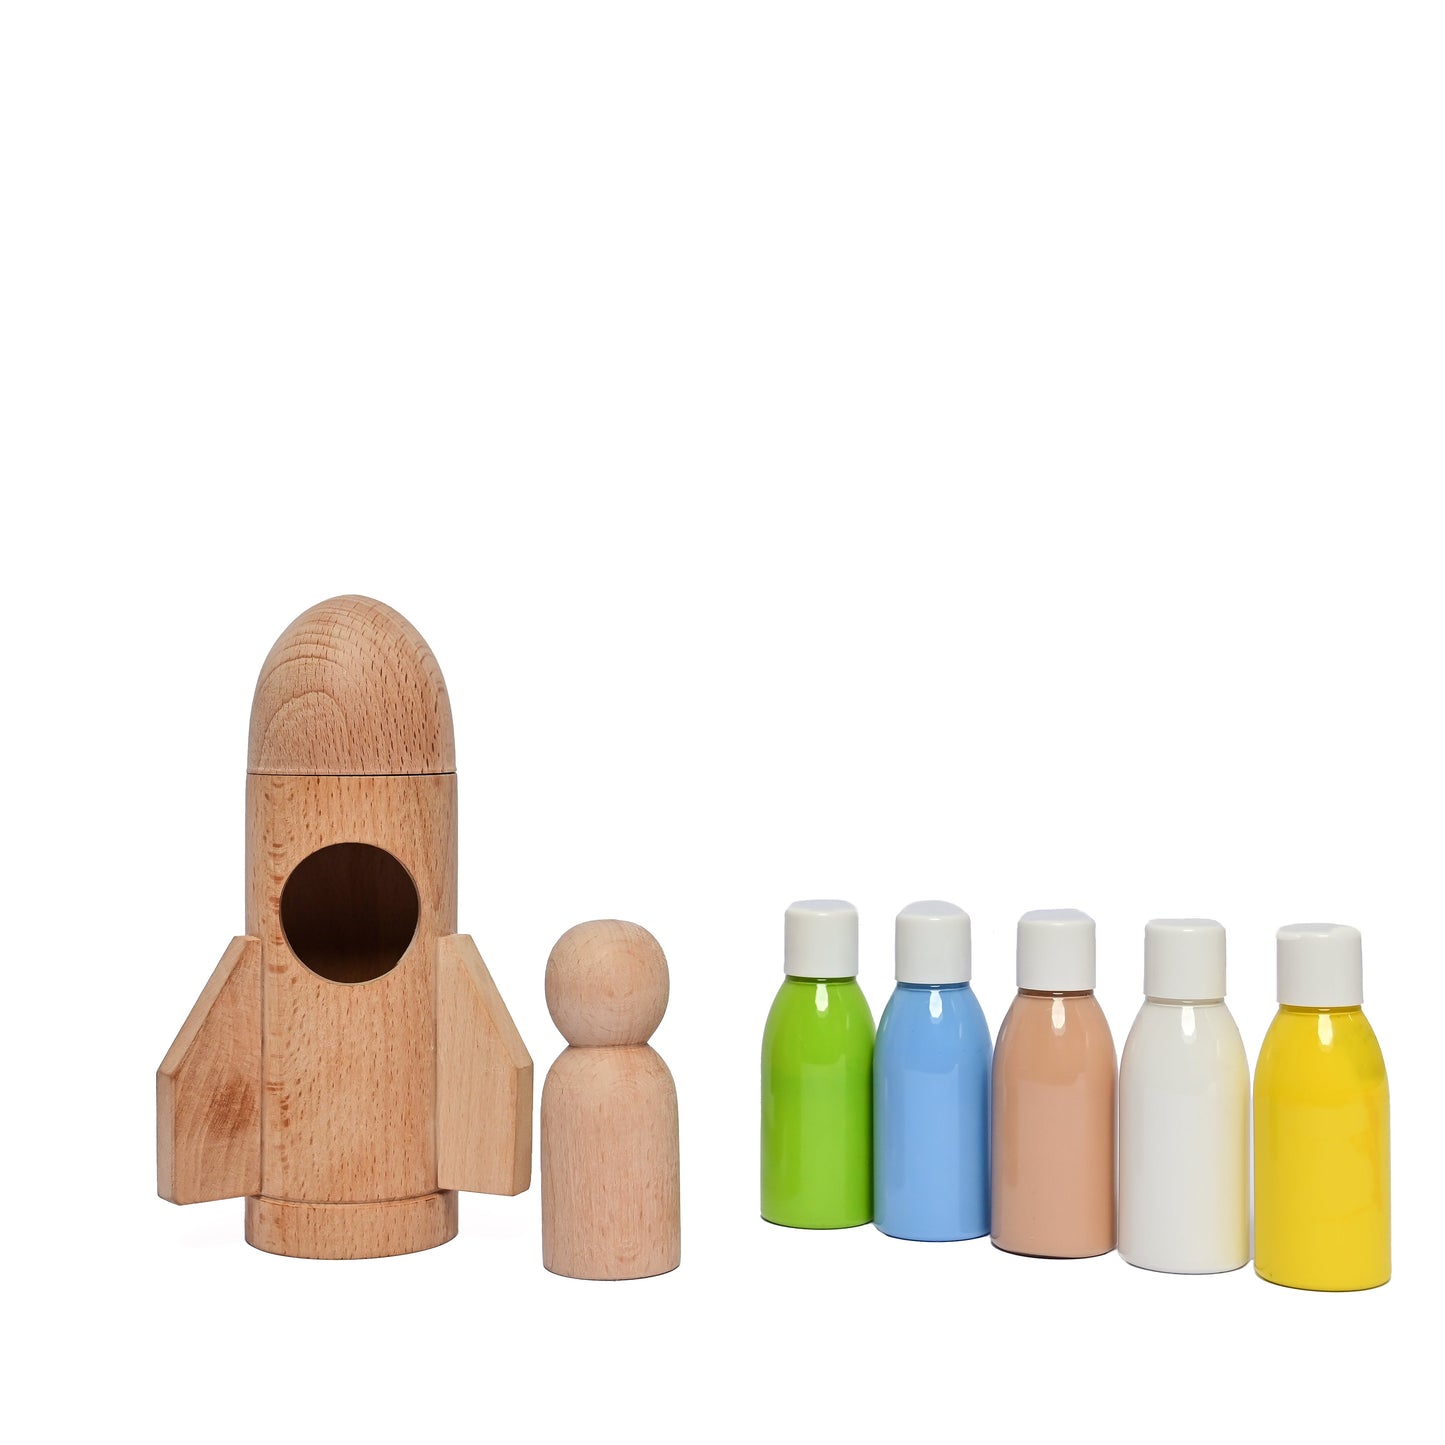 Buy Wooden DIY Rocket Kit Set - SkilloToys.com